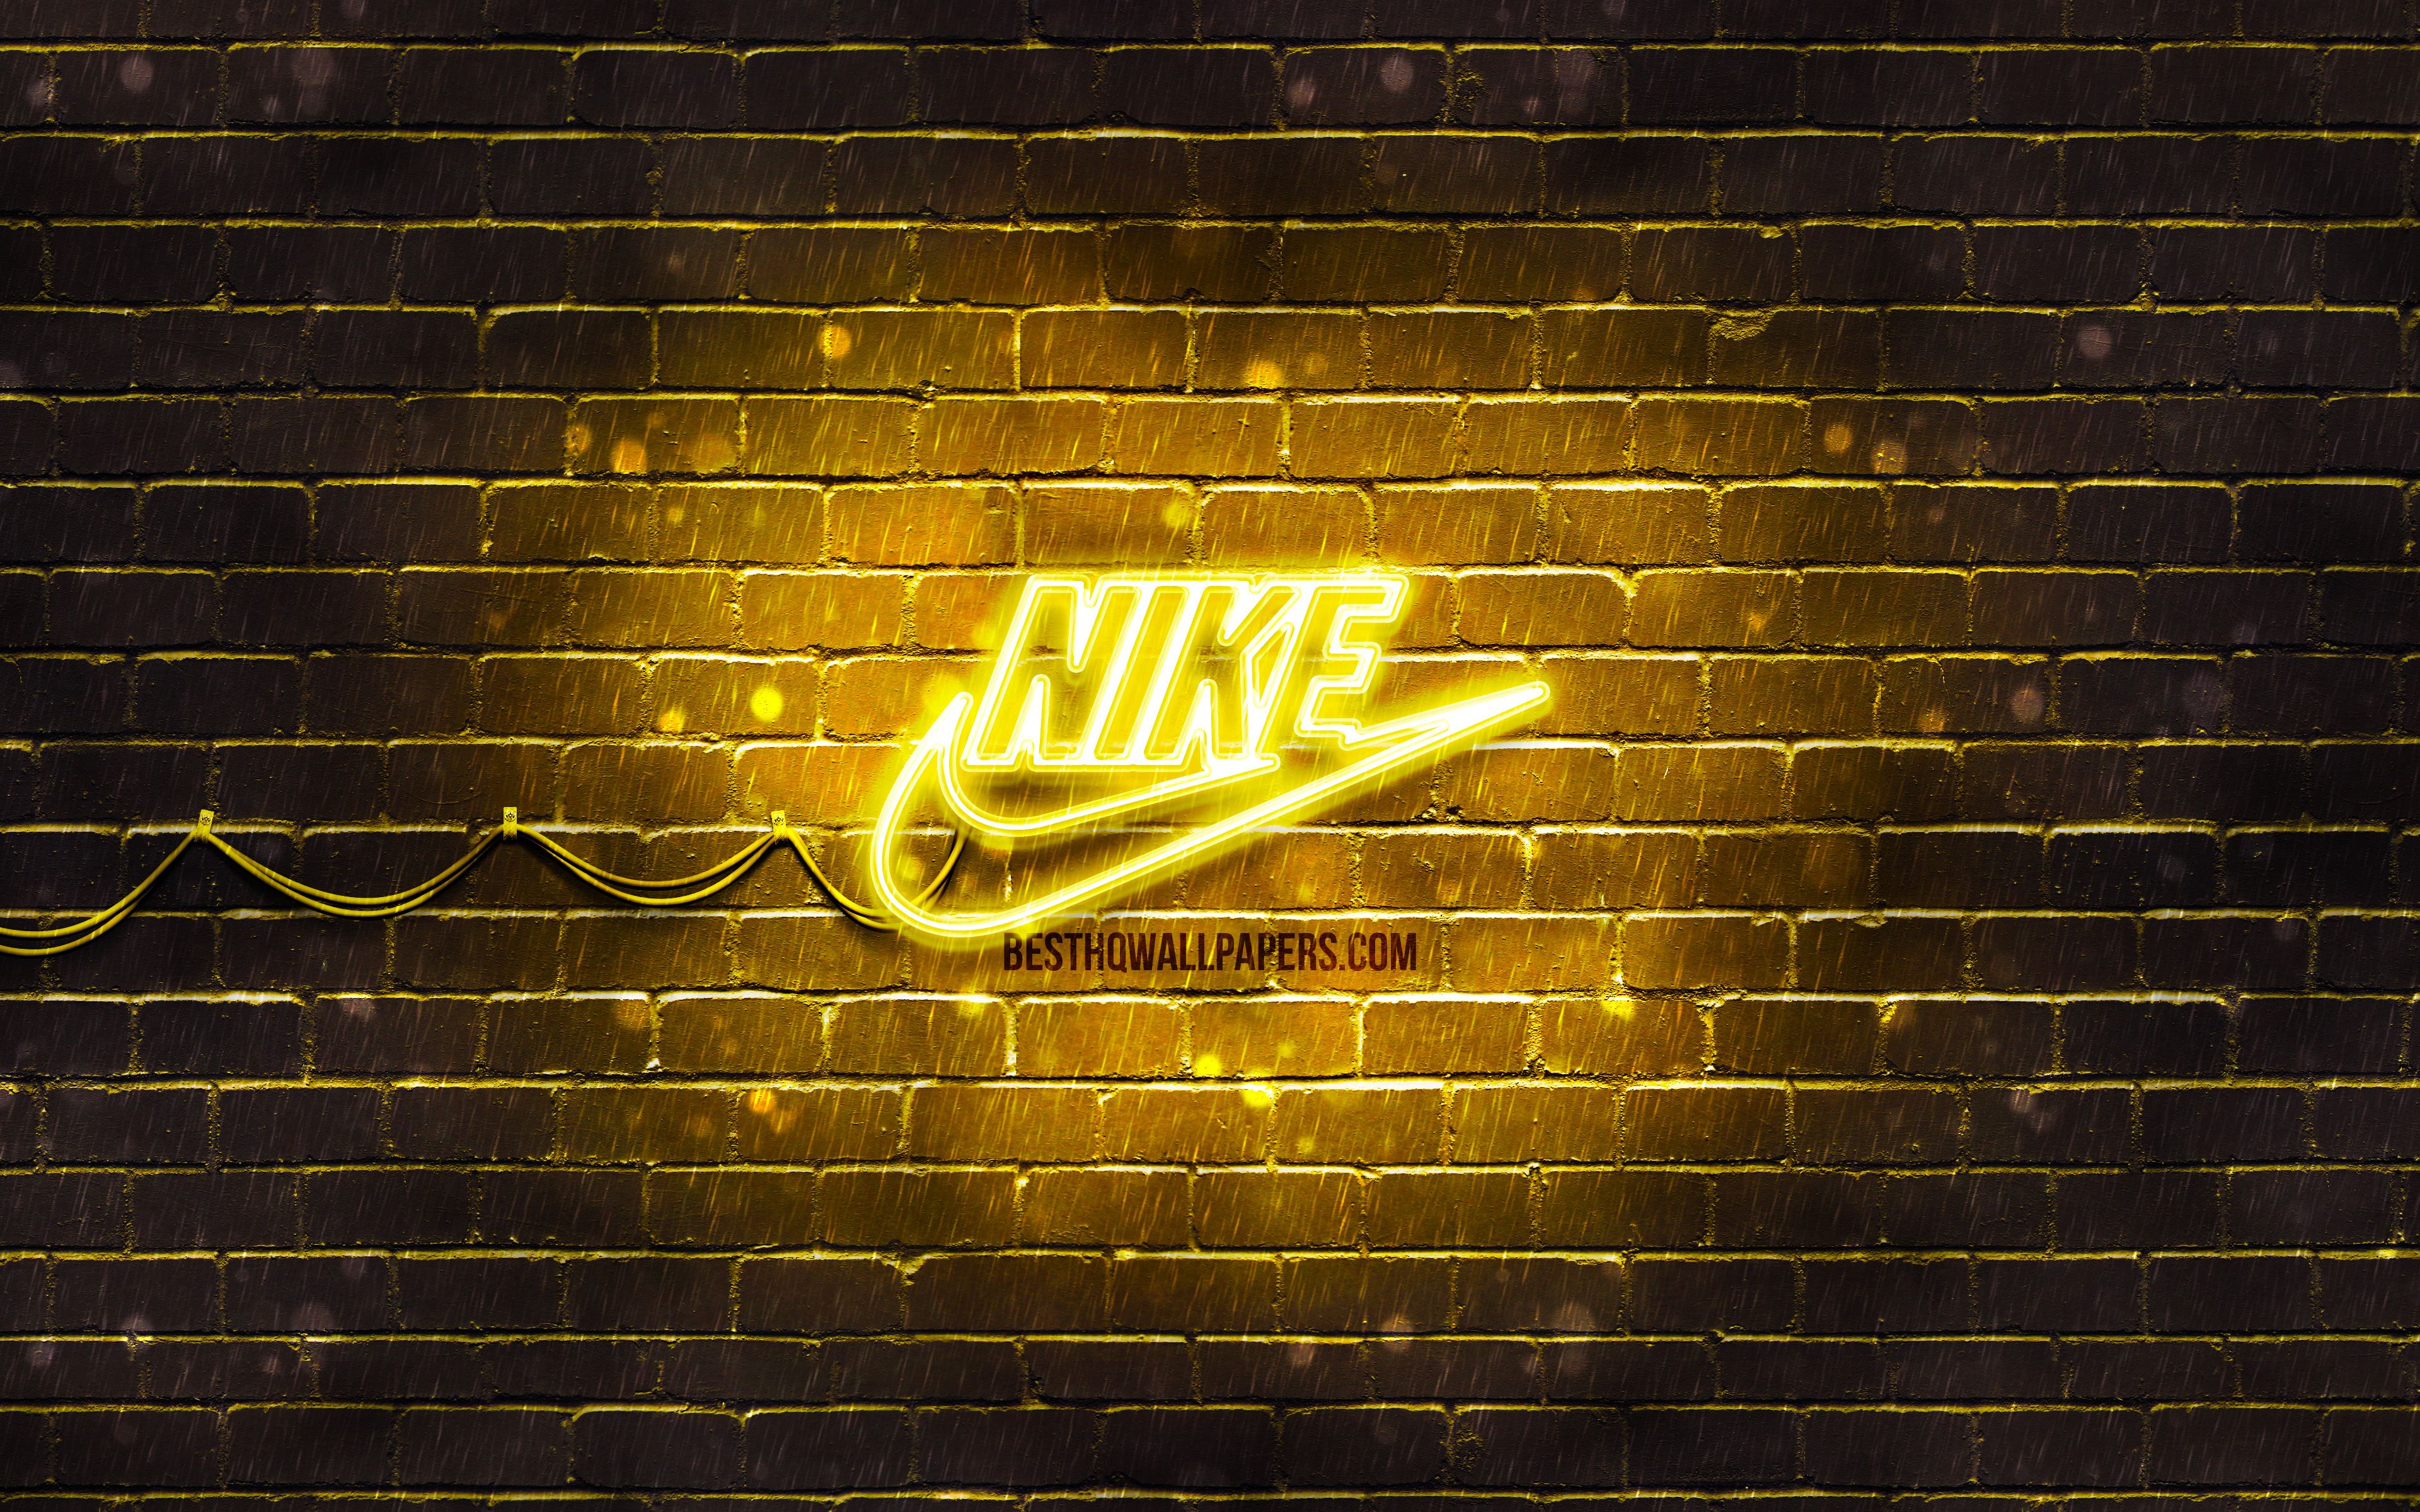 Download wallpaper Nike yellow logo, 4k, yellow brickwall, Nike logo, sports brands, Nike neon logo, Nike for desktop with resolution 3840x2400. High Quality HD picture wallpaper